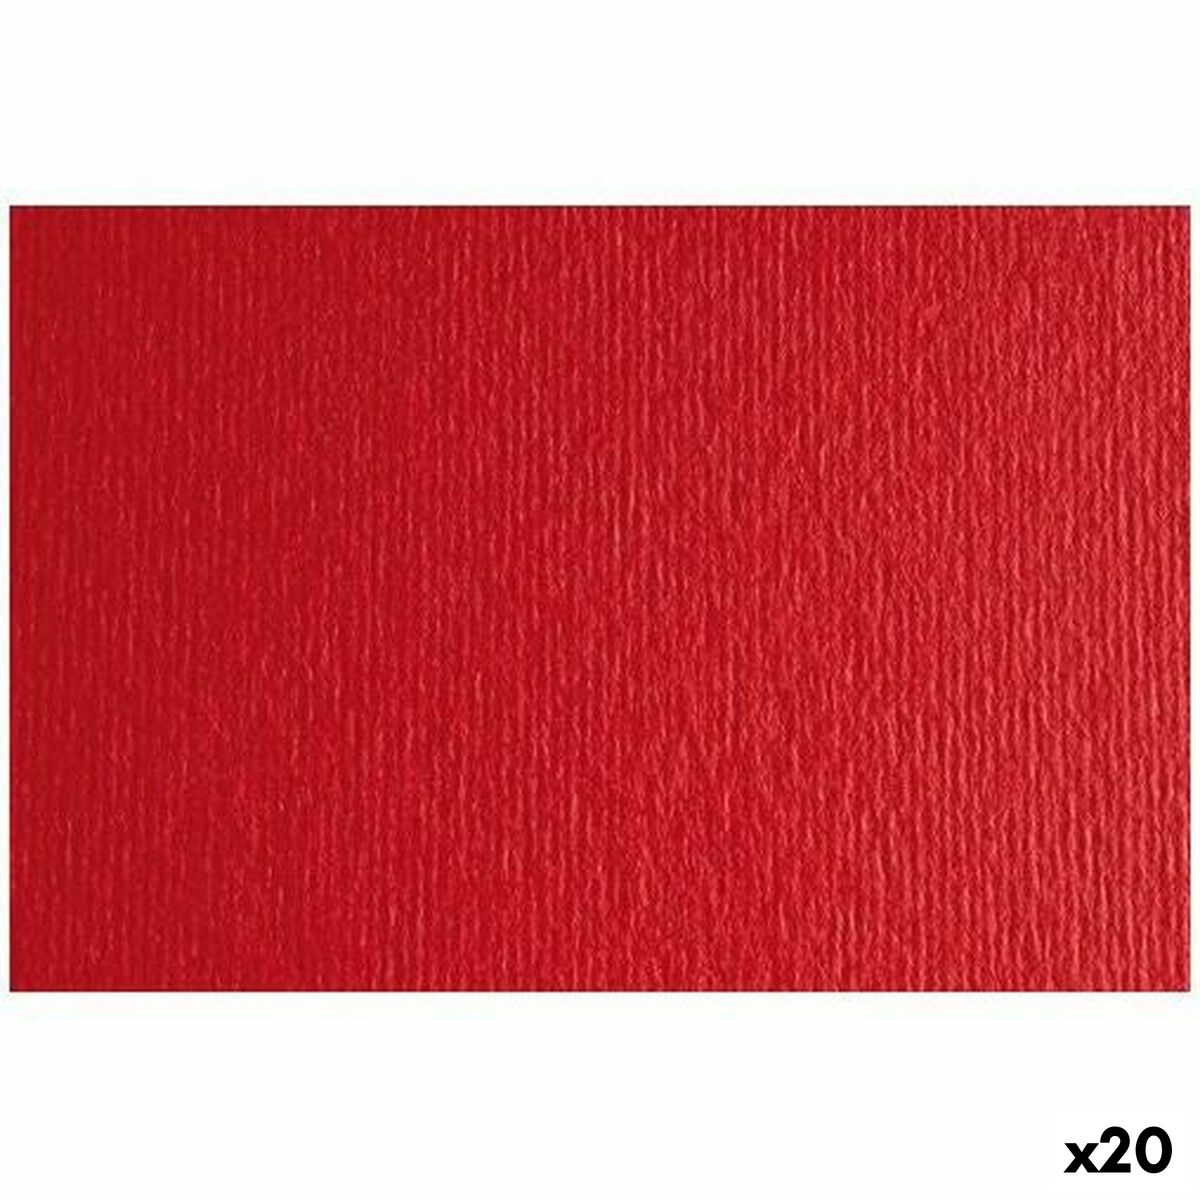 Card Sadipal LR 200 Texturised Red 50 x 70 cm (20 Units)